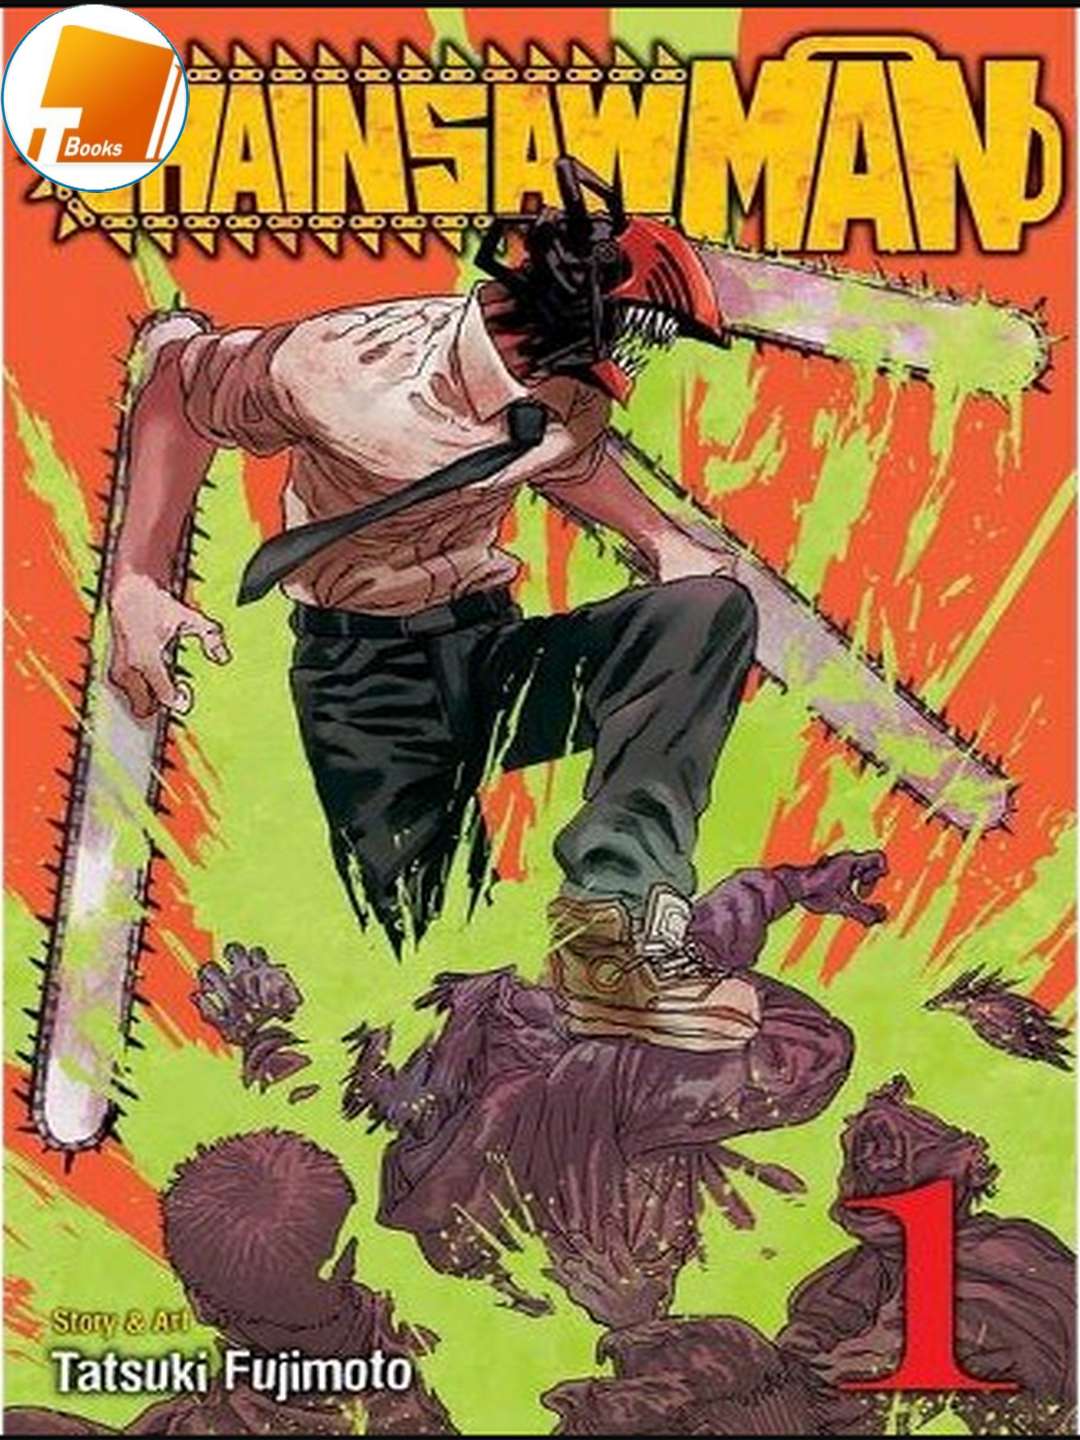 Download Truyện Tranh Chainsaw man – Thợ Săn Quỷ Tác giả: Fujimoto Tatsuki